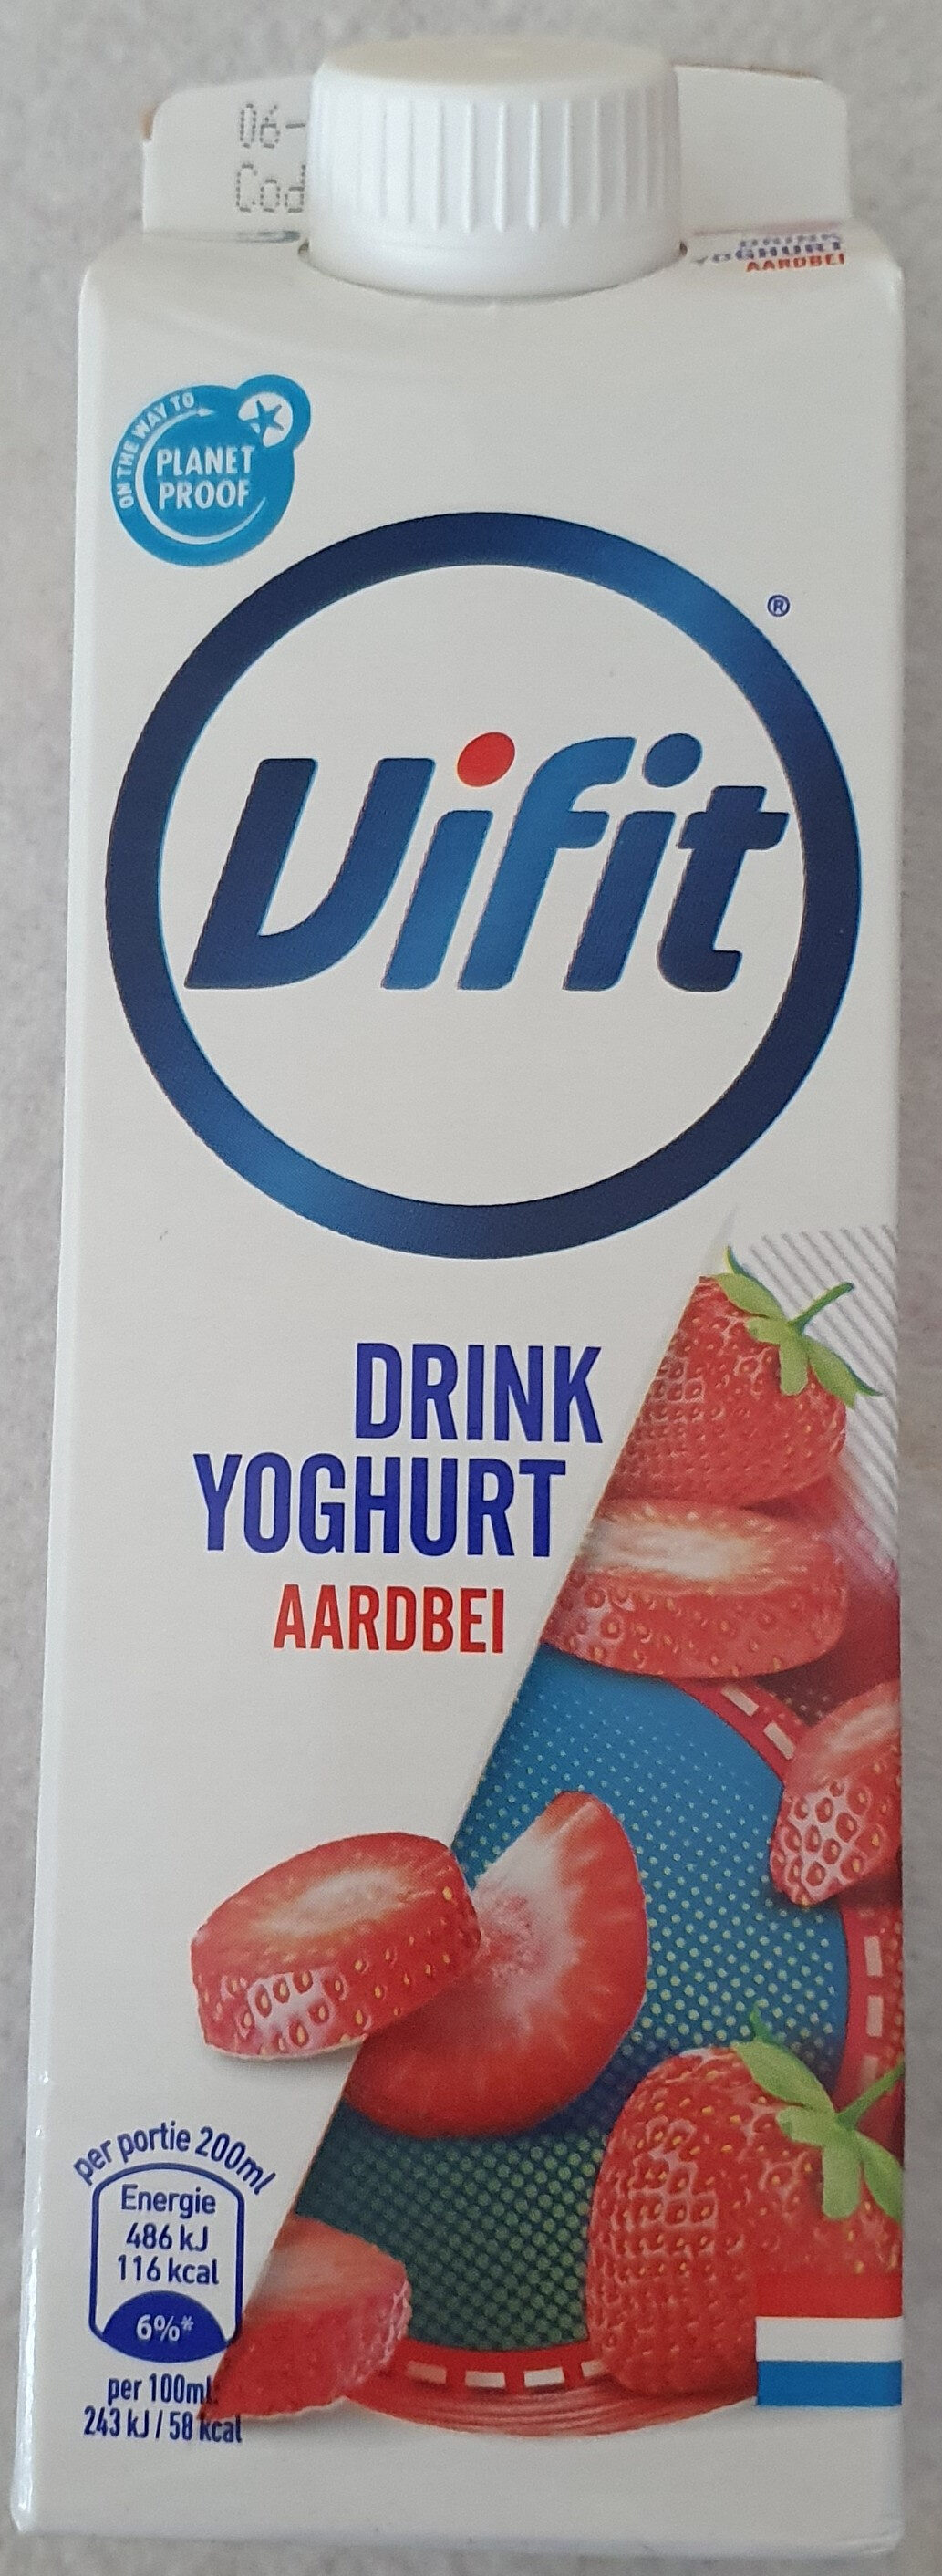 Drinkyoghurt Aardbei - Product